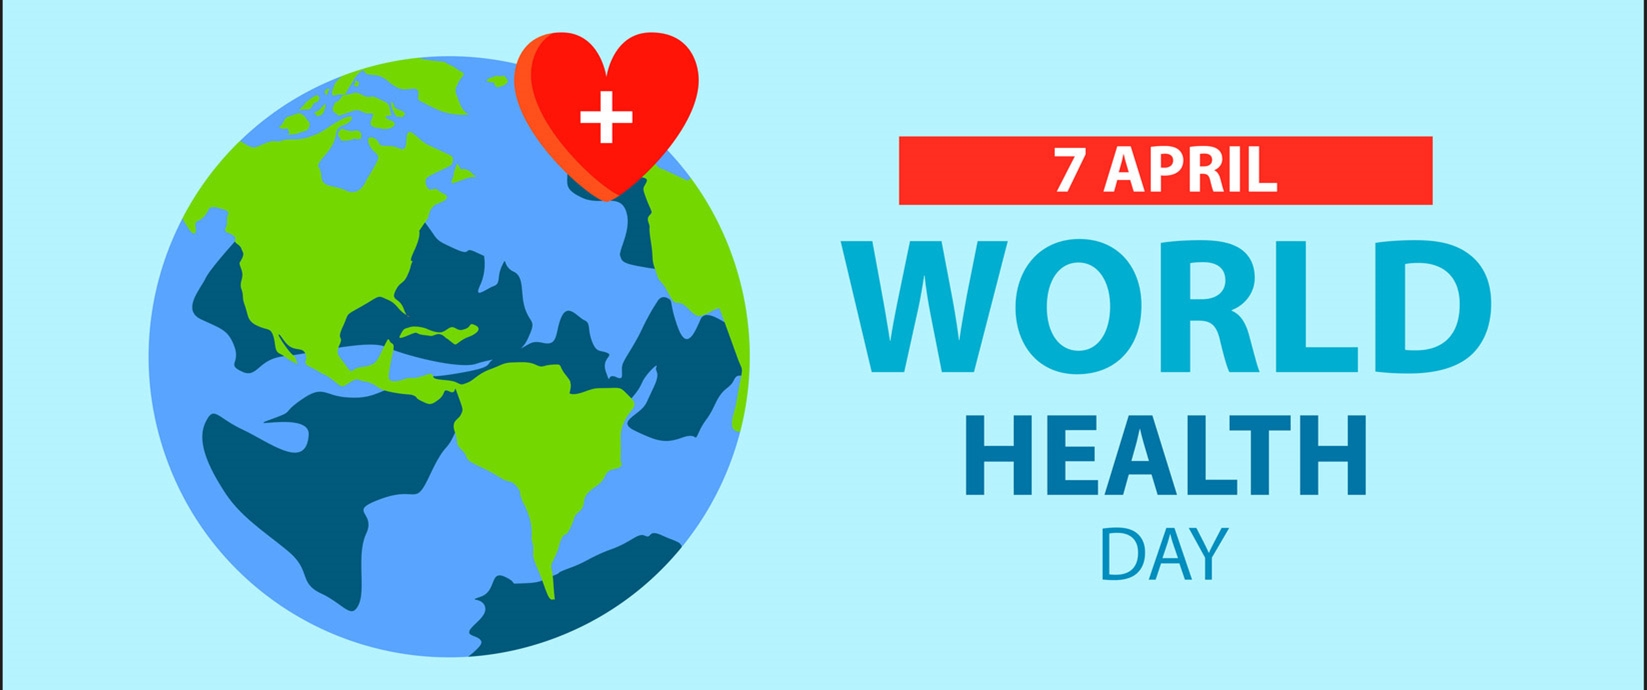 World Health Day 2018